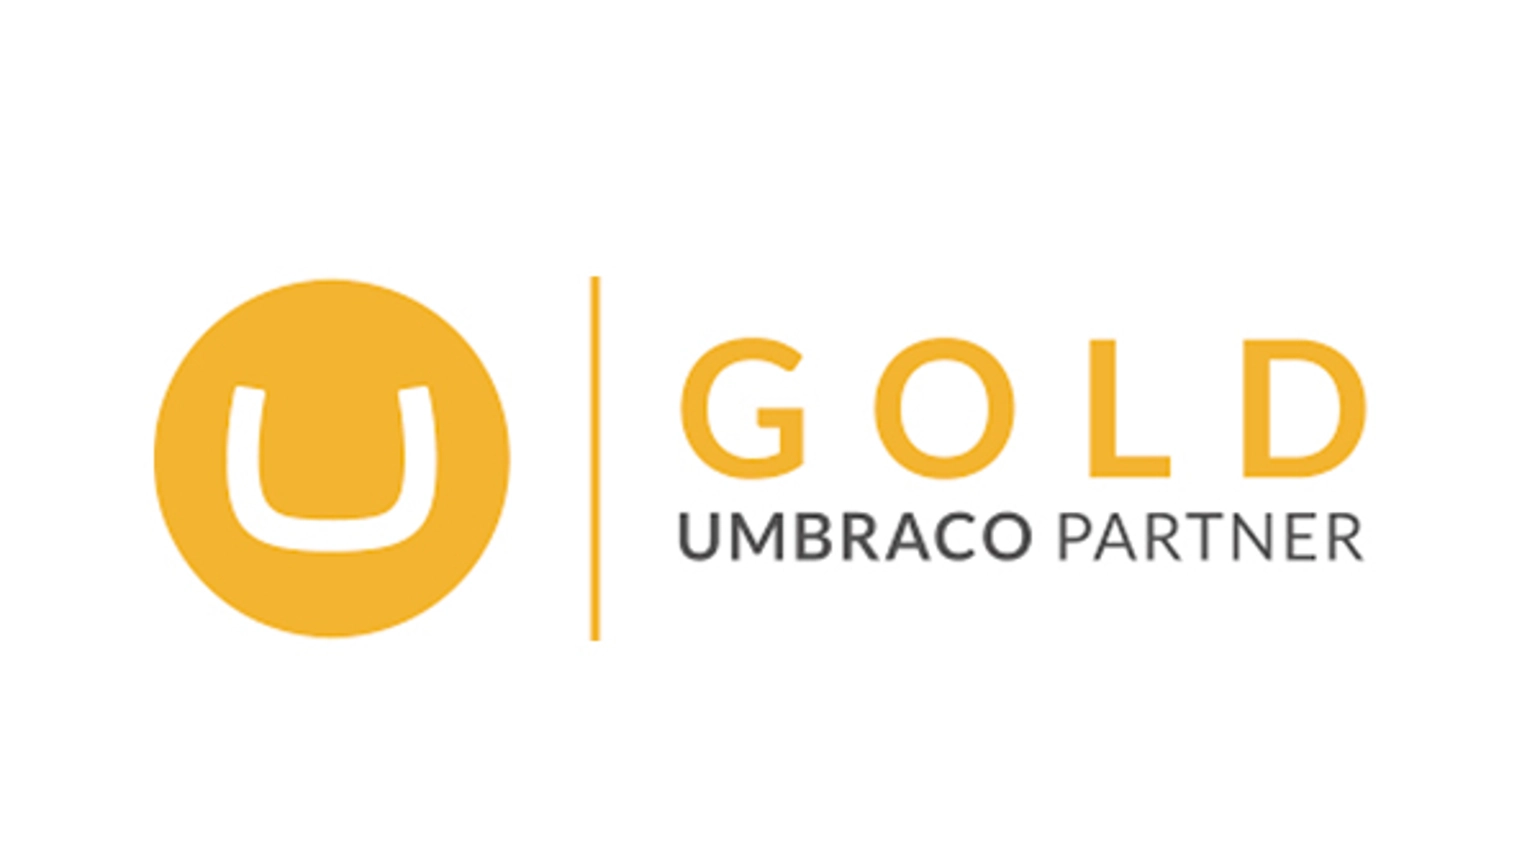 Umbraco Gold Partner